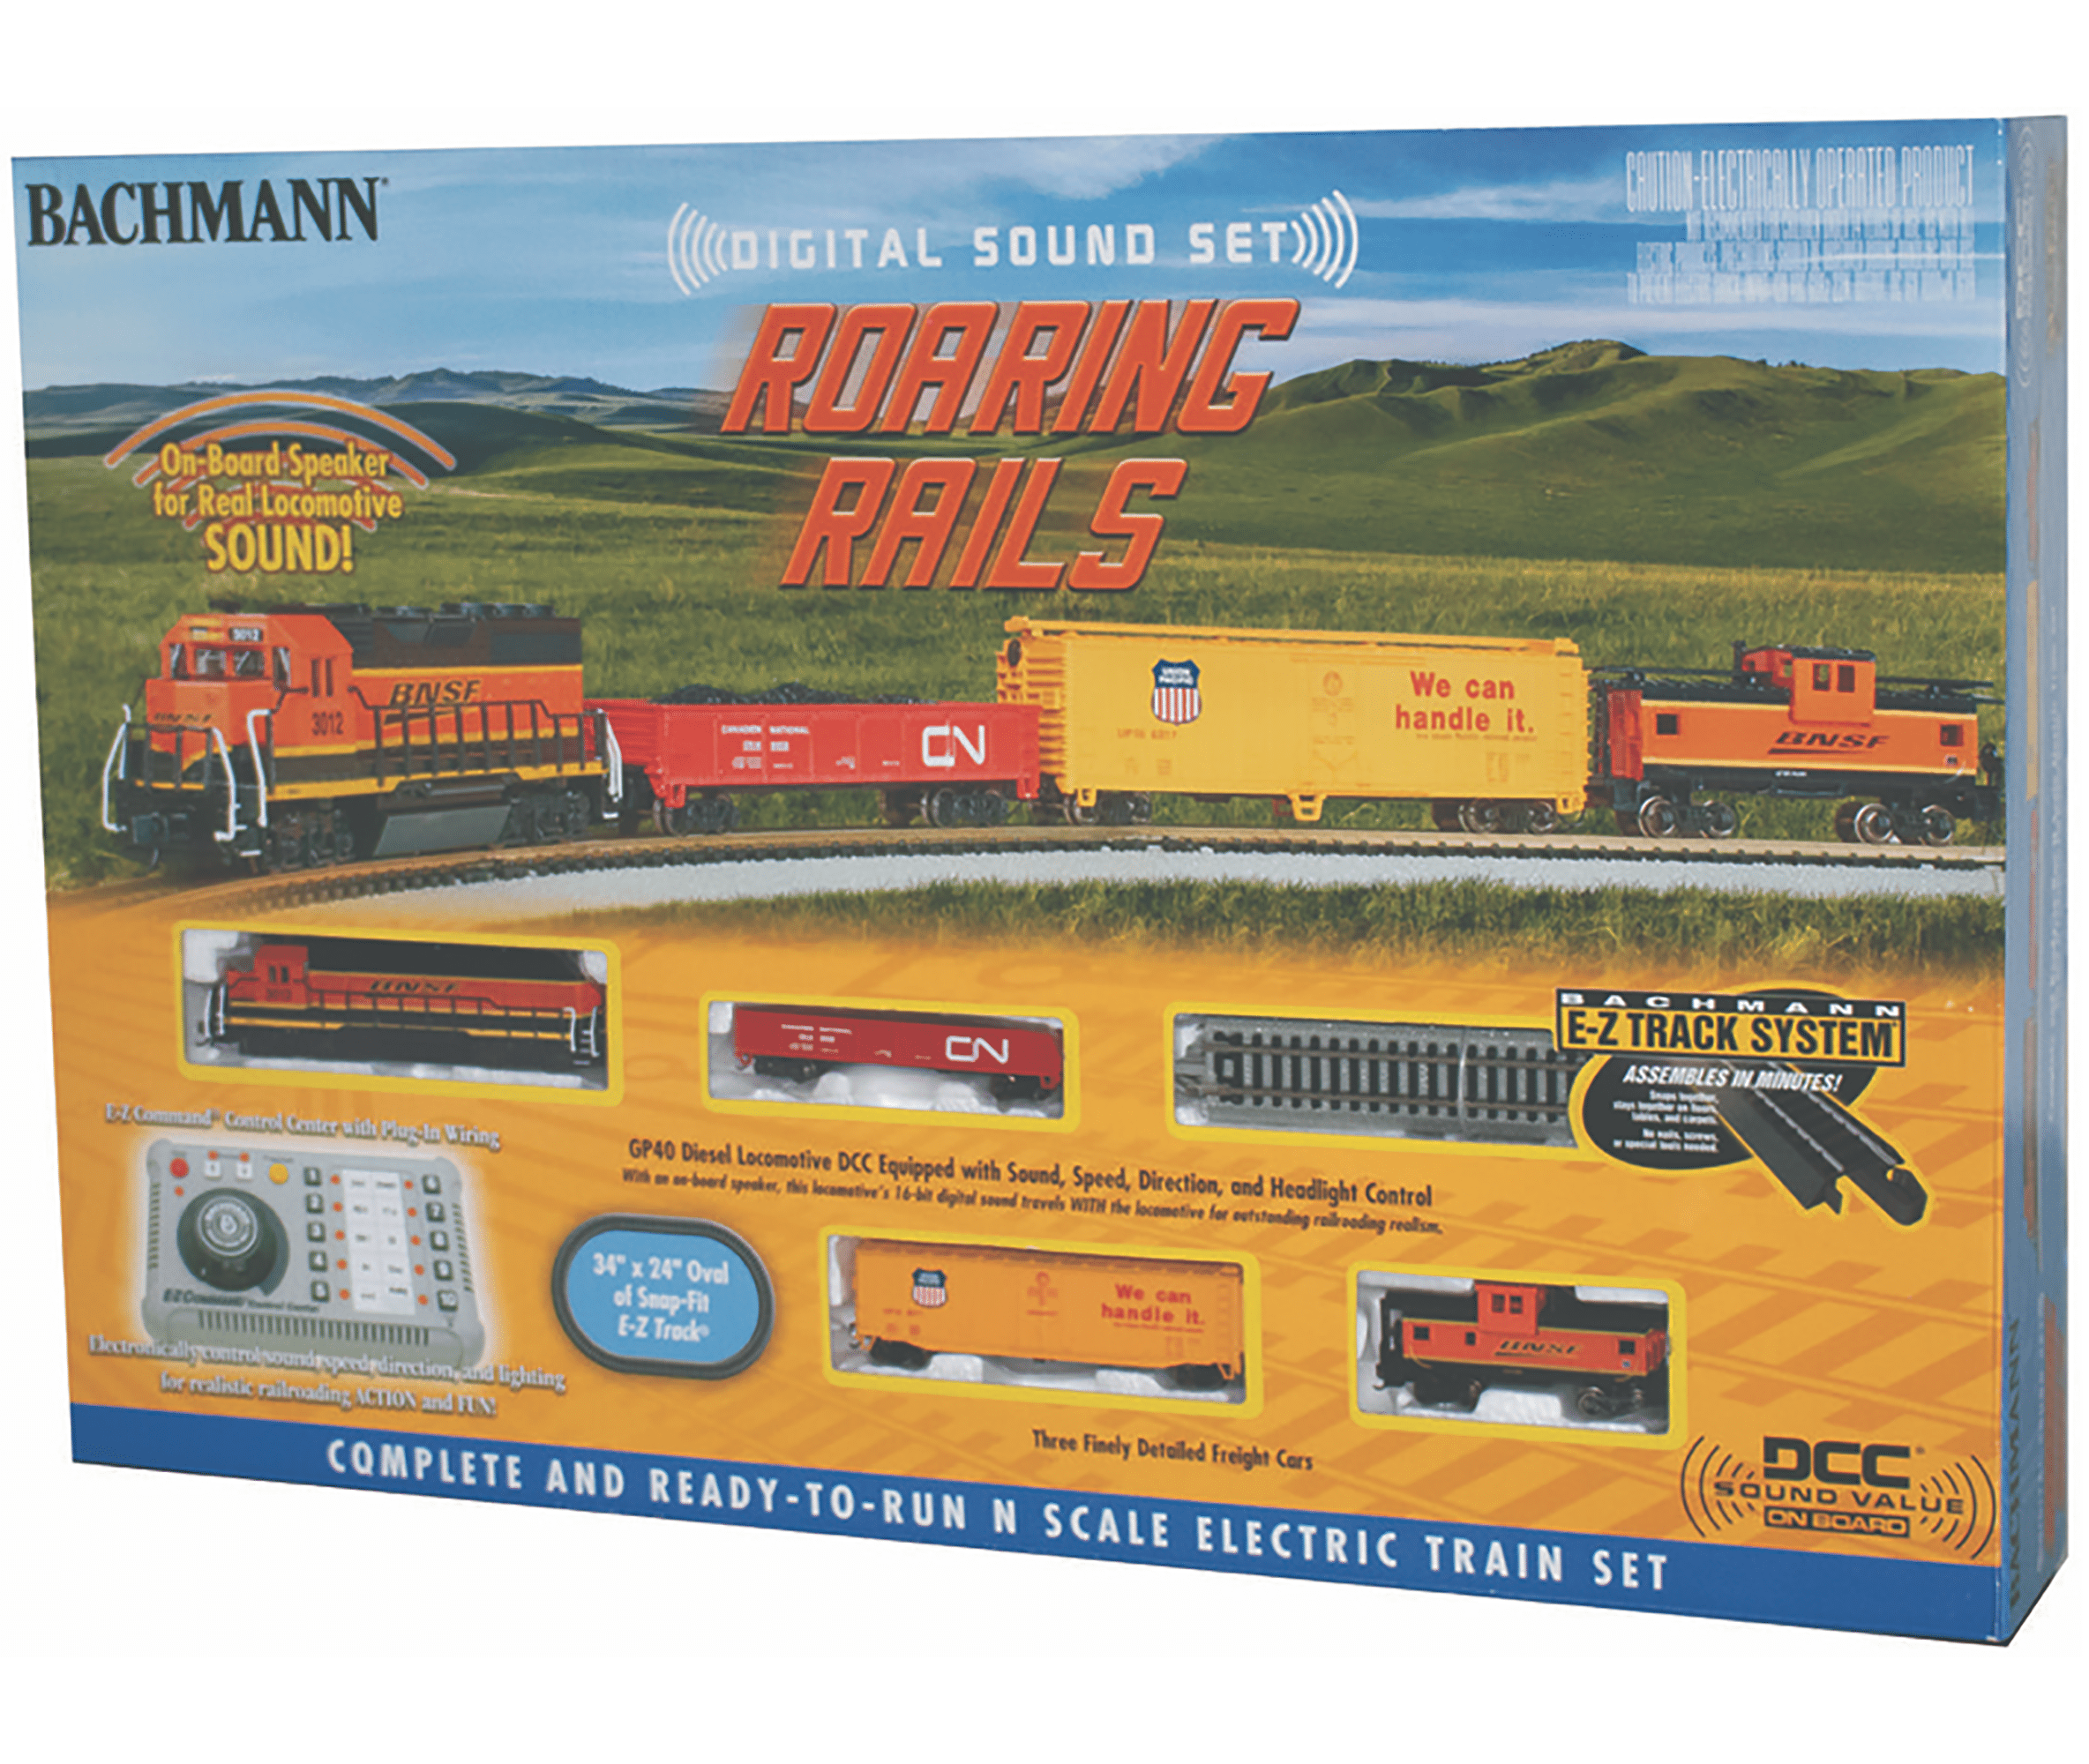 Bachmann Trains N Scale Roaring Rails with Digital Sound Electric Train Set  